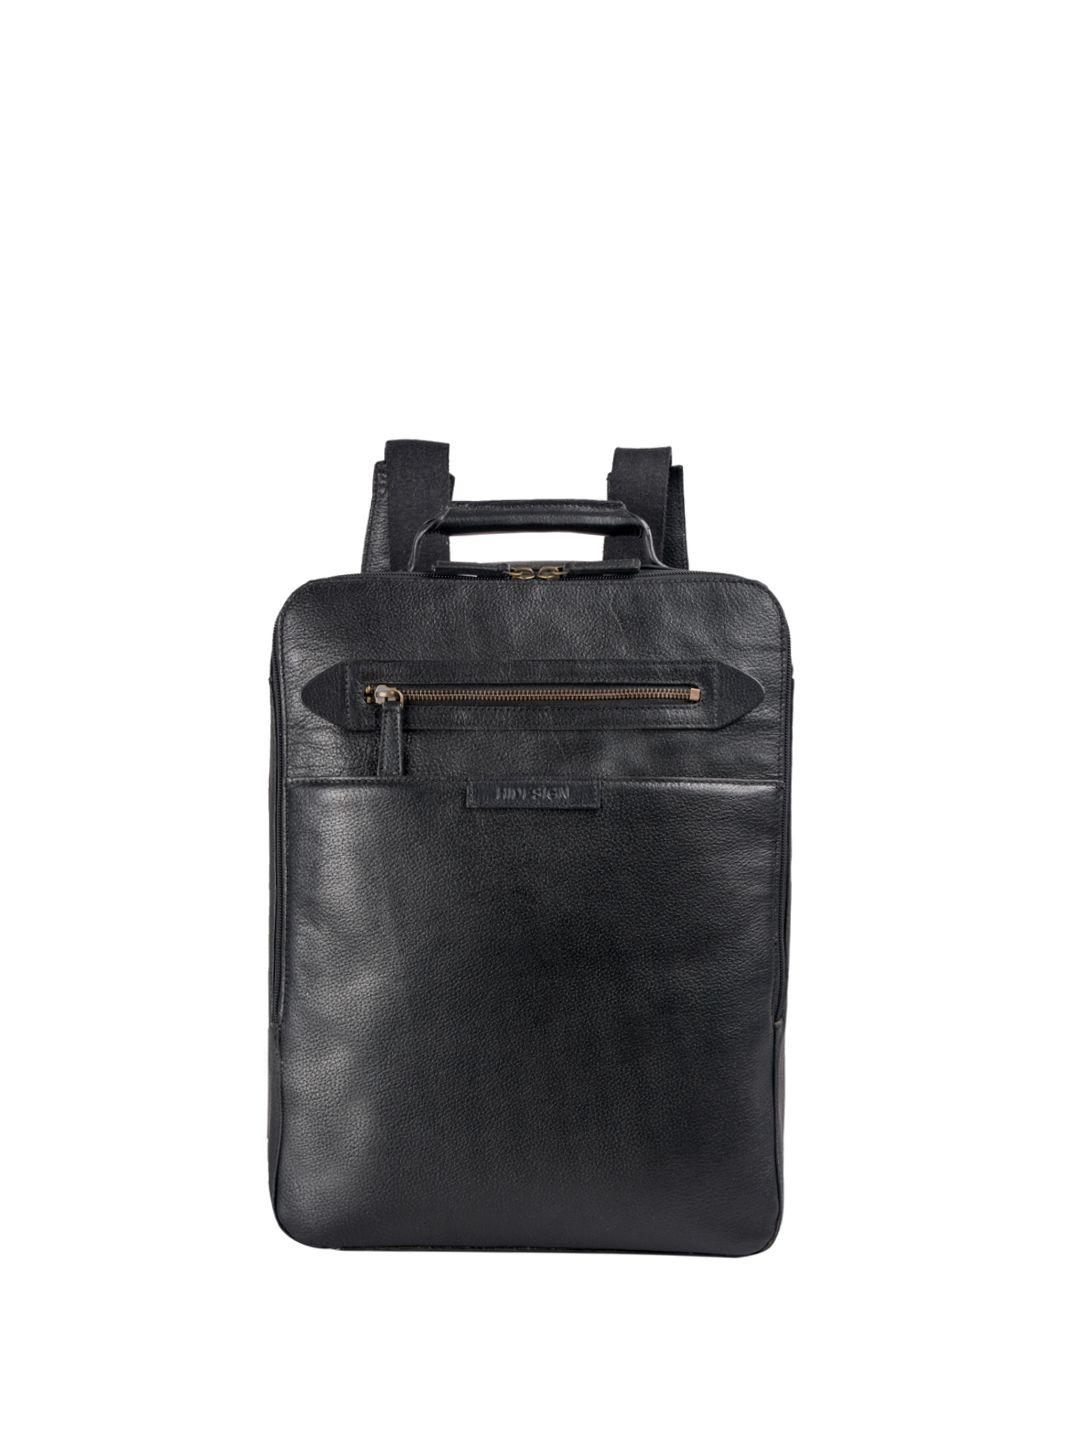 hidesign unisex black solid leather backpack